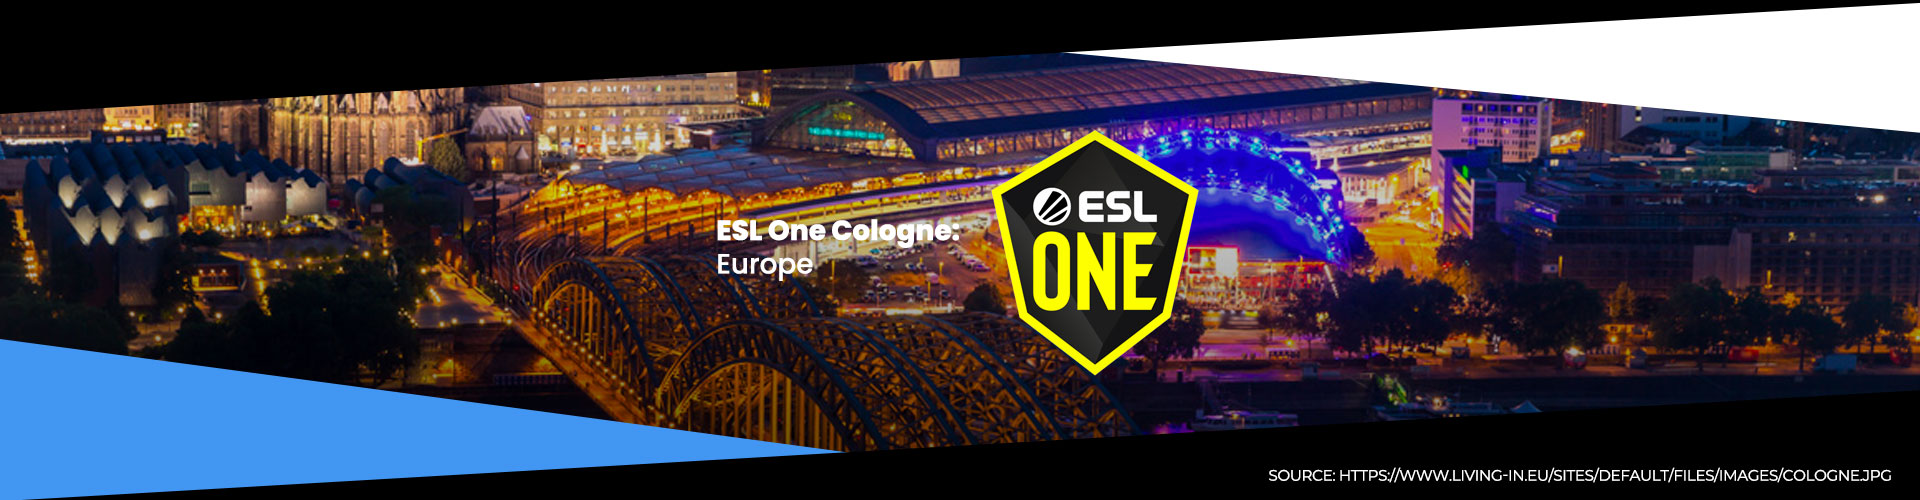 Turneringssida för ESL One Cologne: Europa